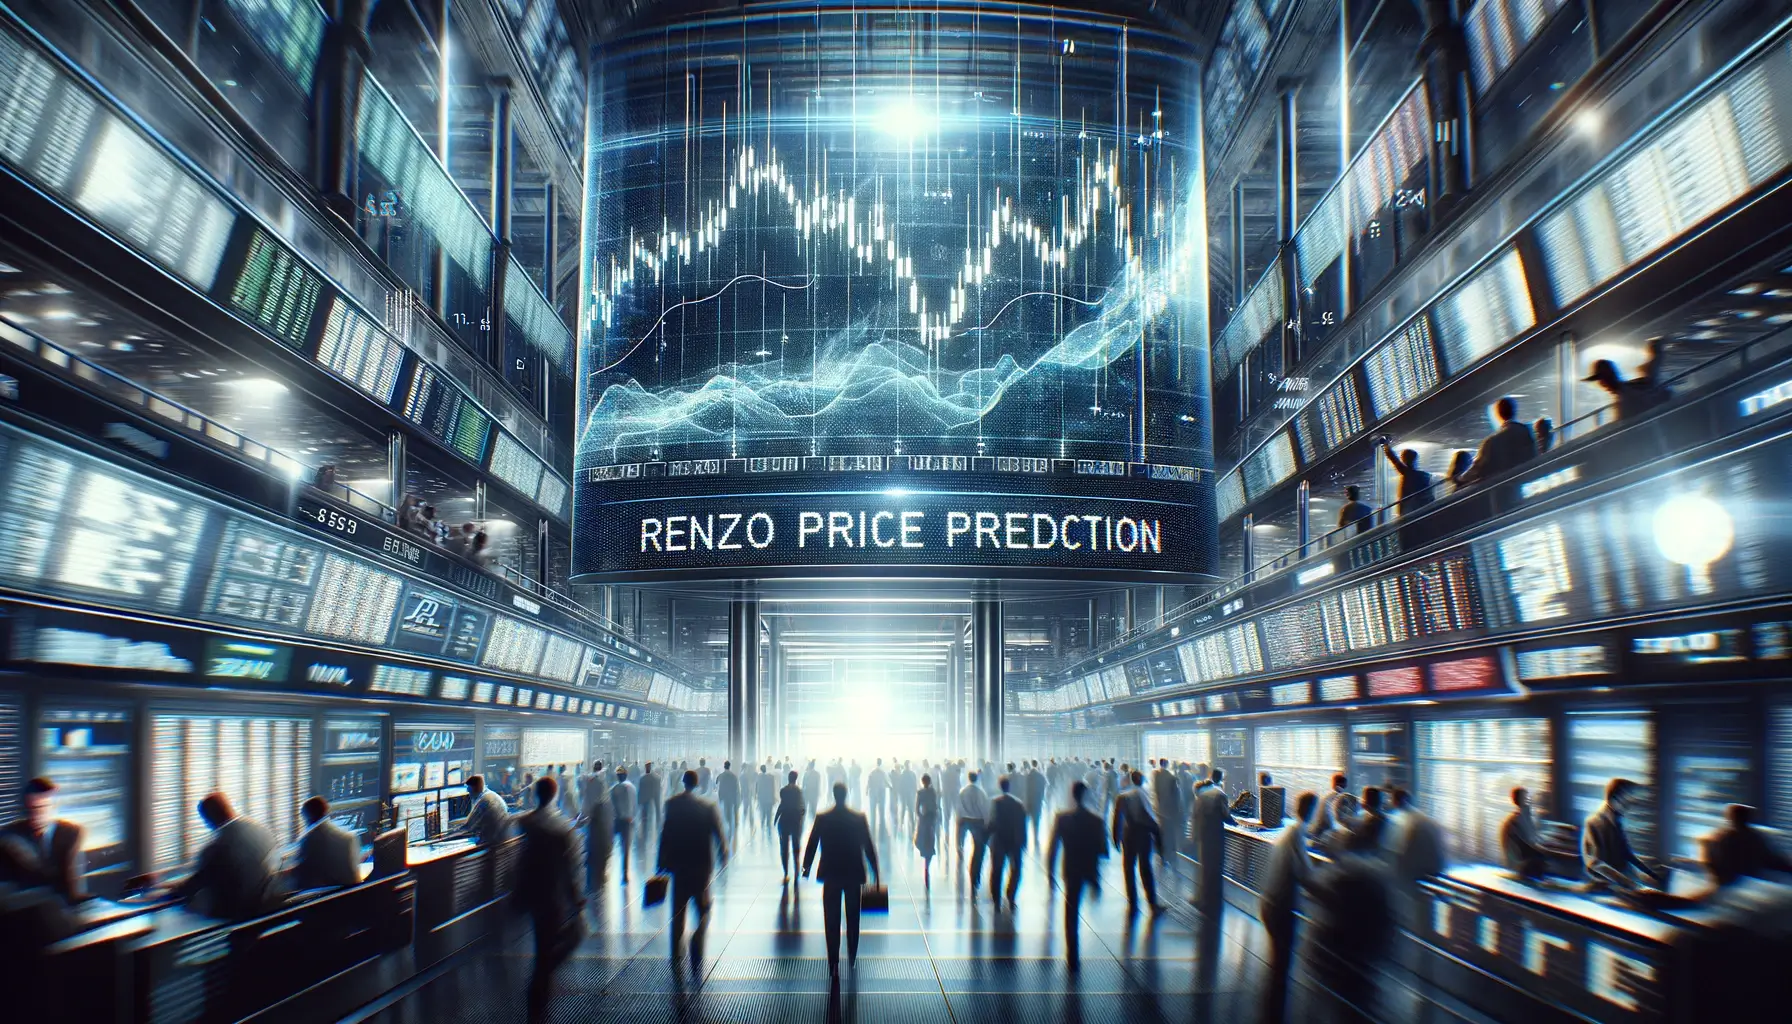 Renzo Price Prediction